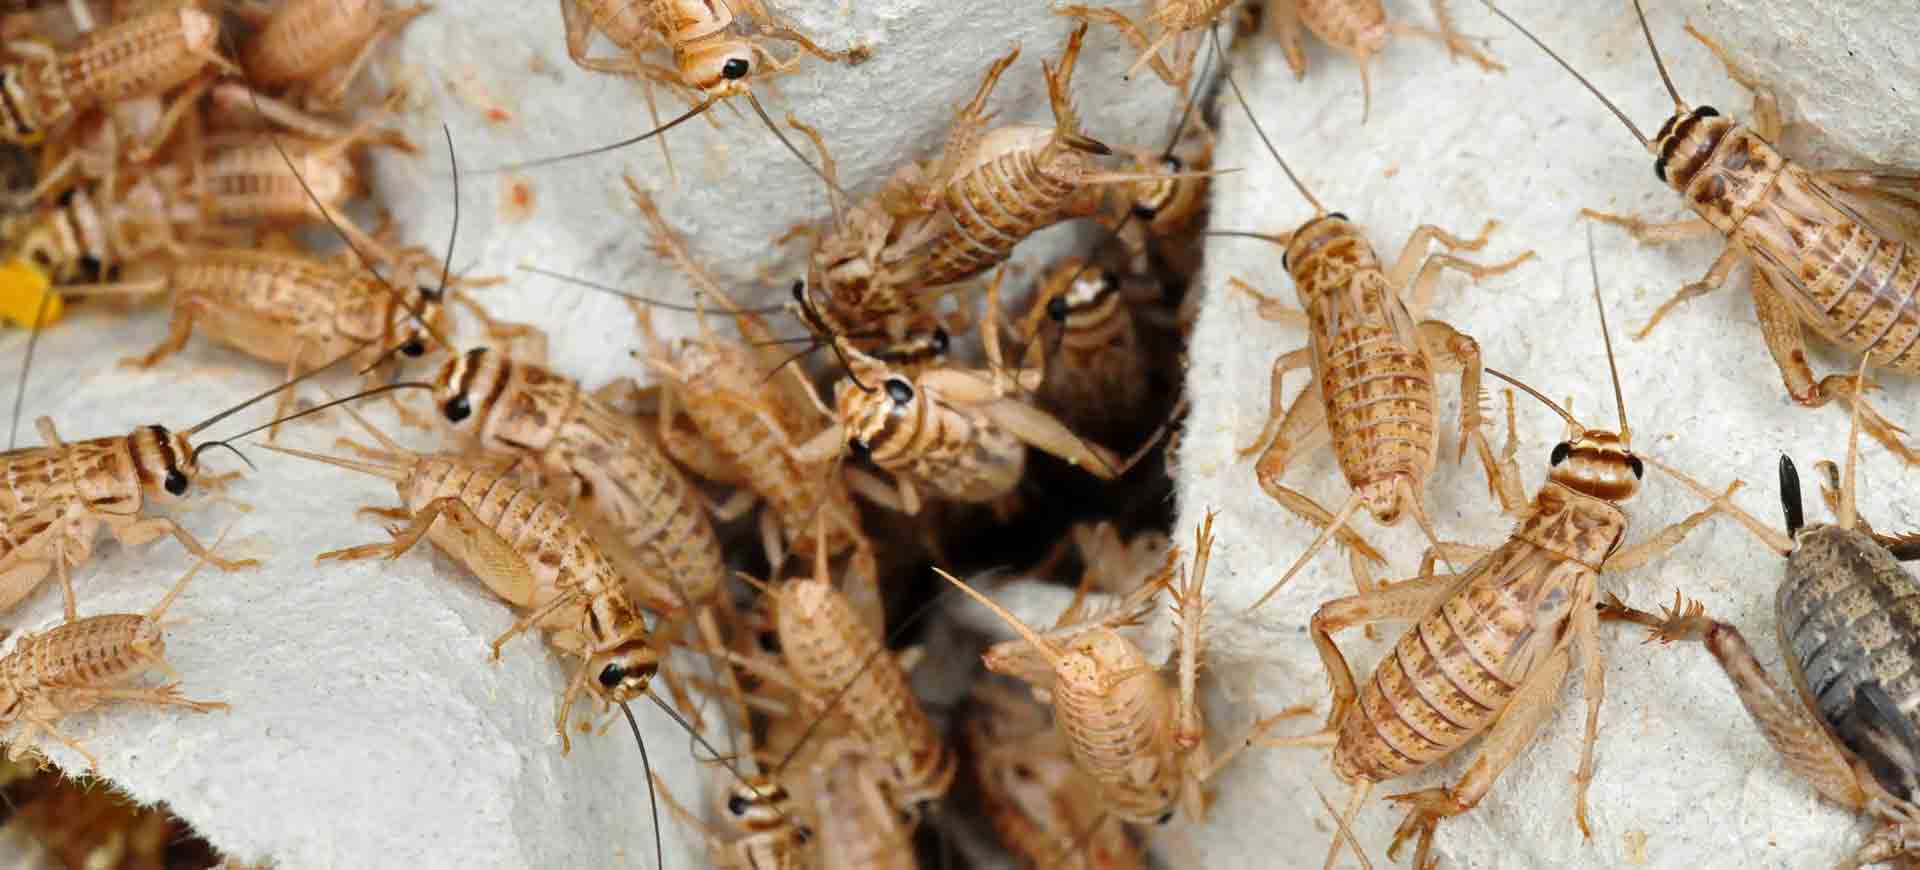 cricket pest control east county san diego